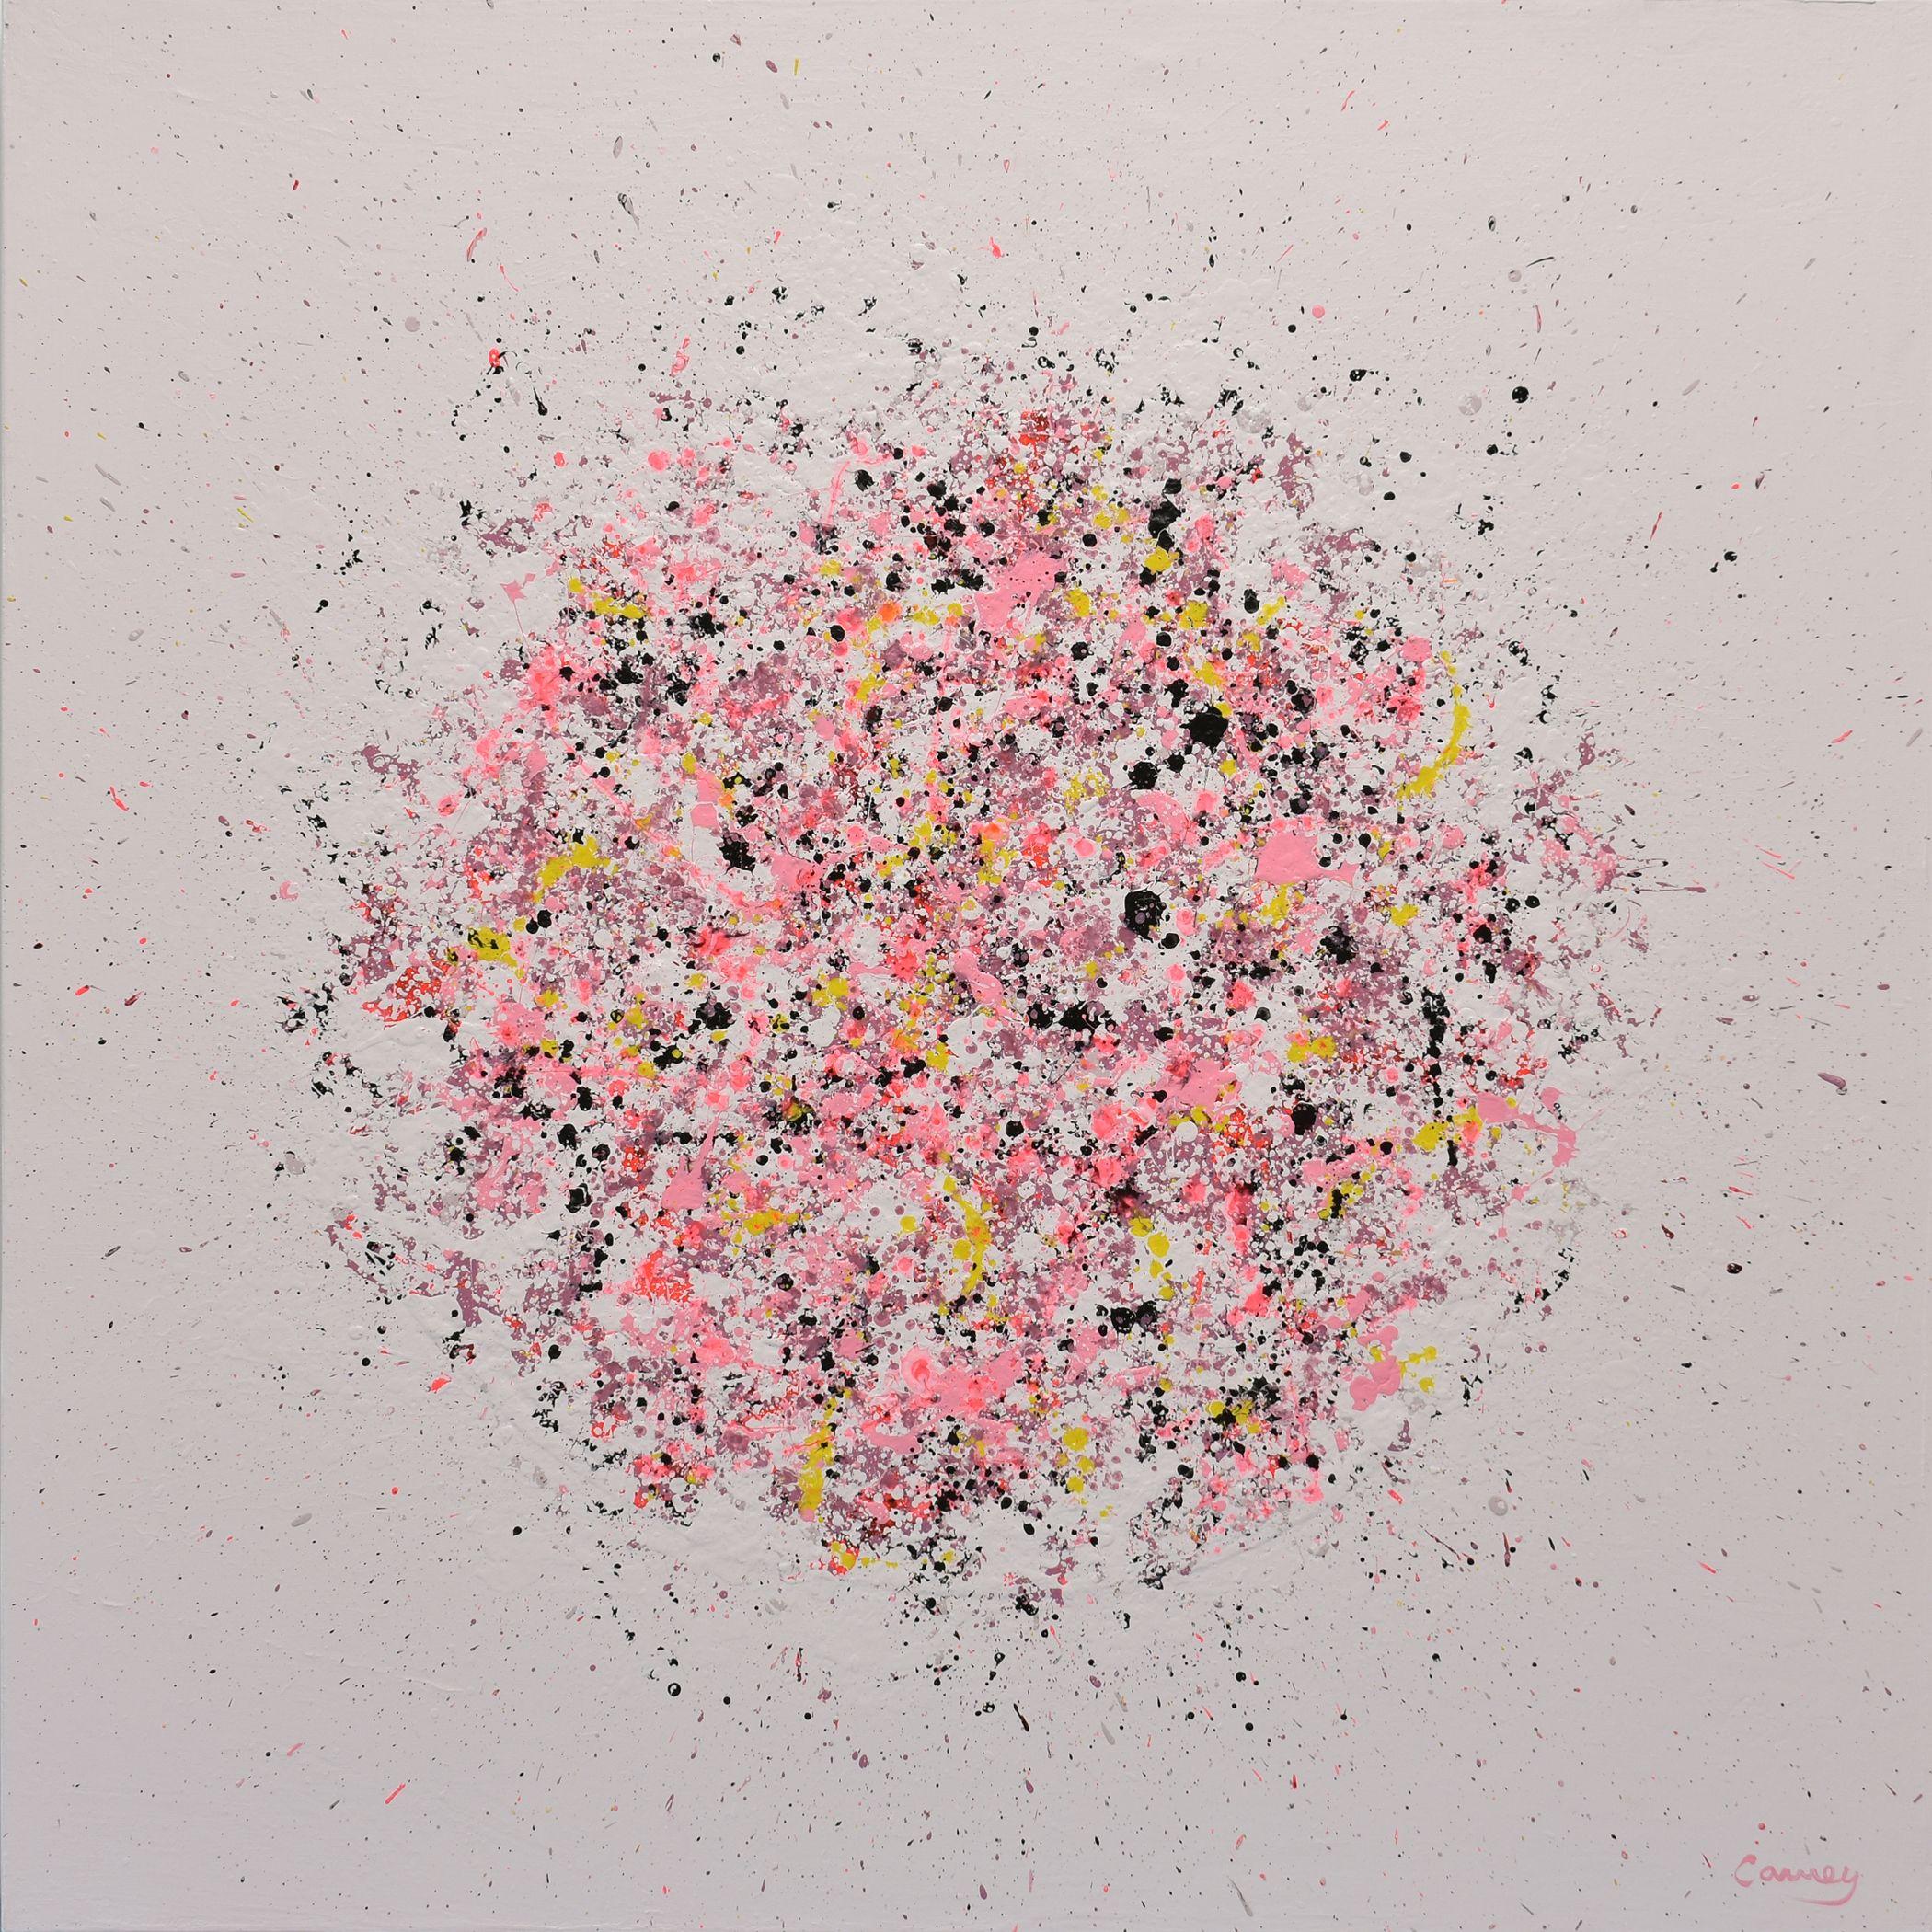 â€œPetal Burst 37â€ is an abstract painting in acrylic on canvas. Various shades of pink, coral, yellow and black explode onto a pale pink background. It is part of the "Petal Burst" series, a collection of floral abstract paintings where drip and